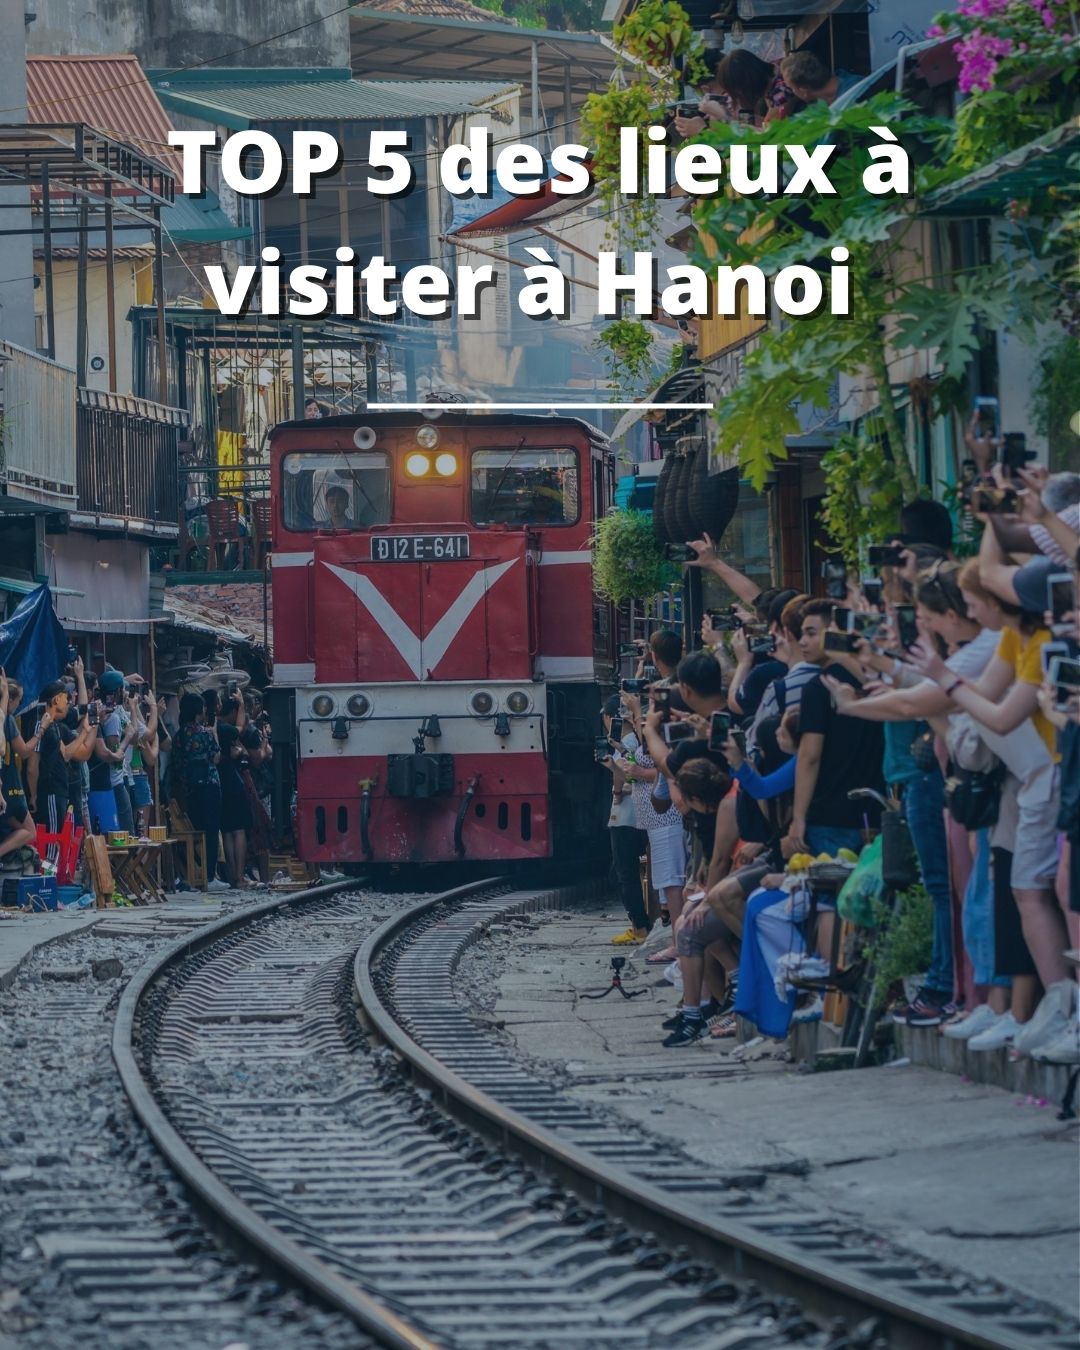 Top 5 lieux a visiter a Hanoi